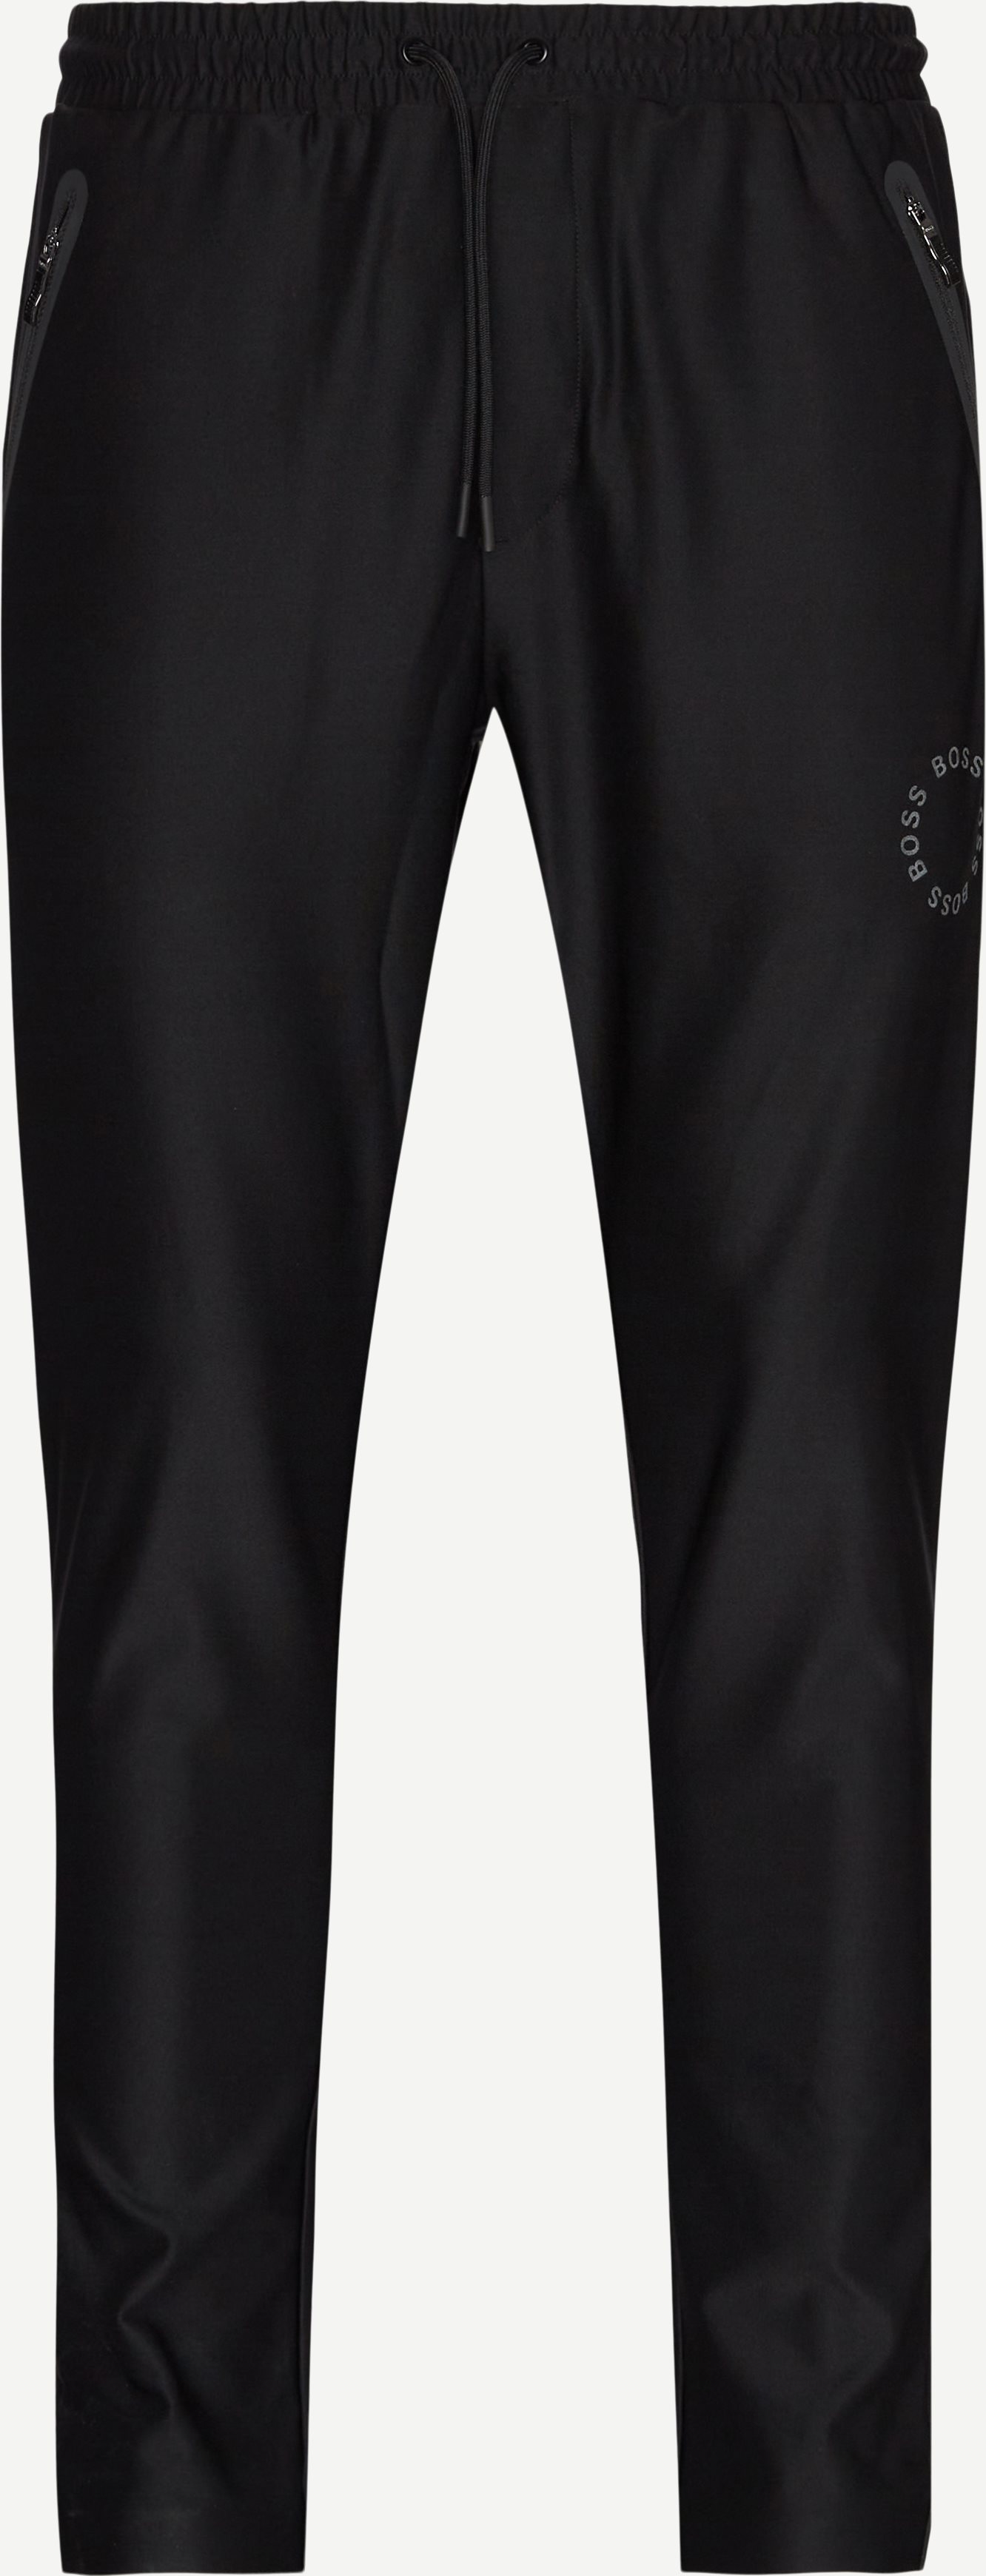 Havog Sweatpants - Bukser - Regular fit - Sort